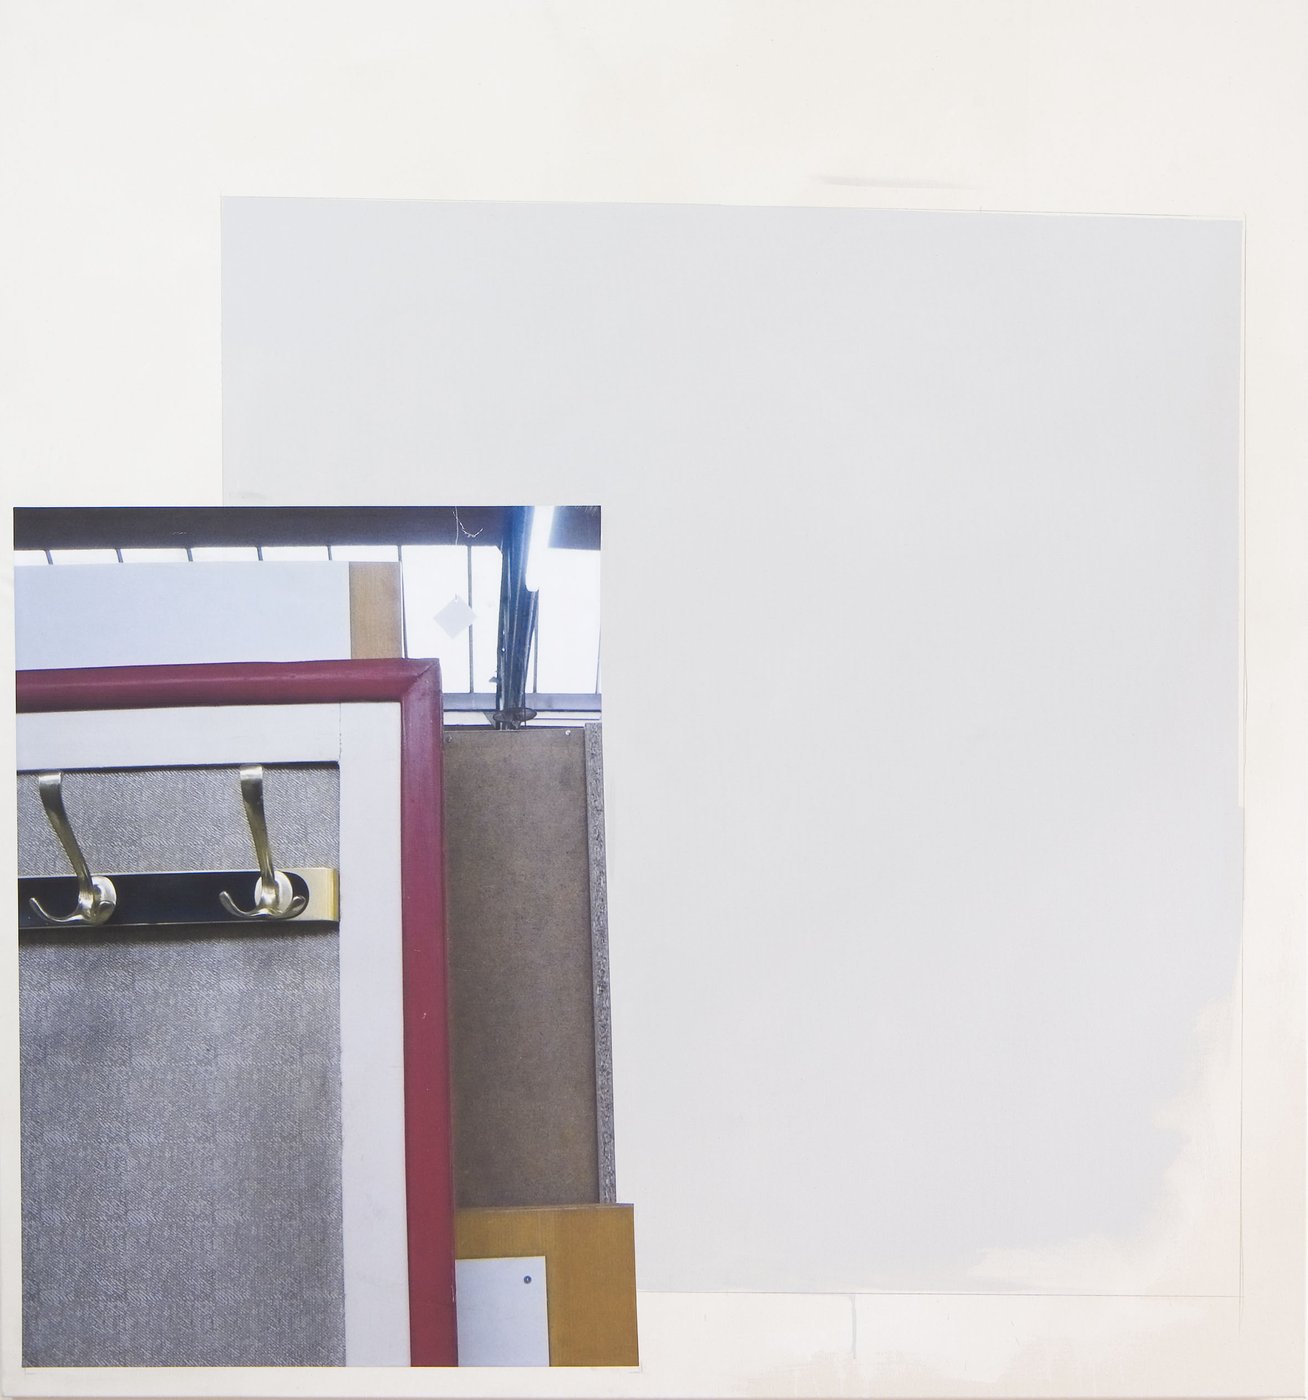 
   Jörg Reissner,
   
    carla
   
   2011
   
   Acryl, Farbdruck auf Papier, Leinwand
   
   150 x 140 cm
  
